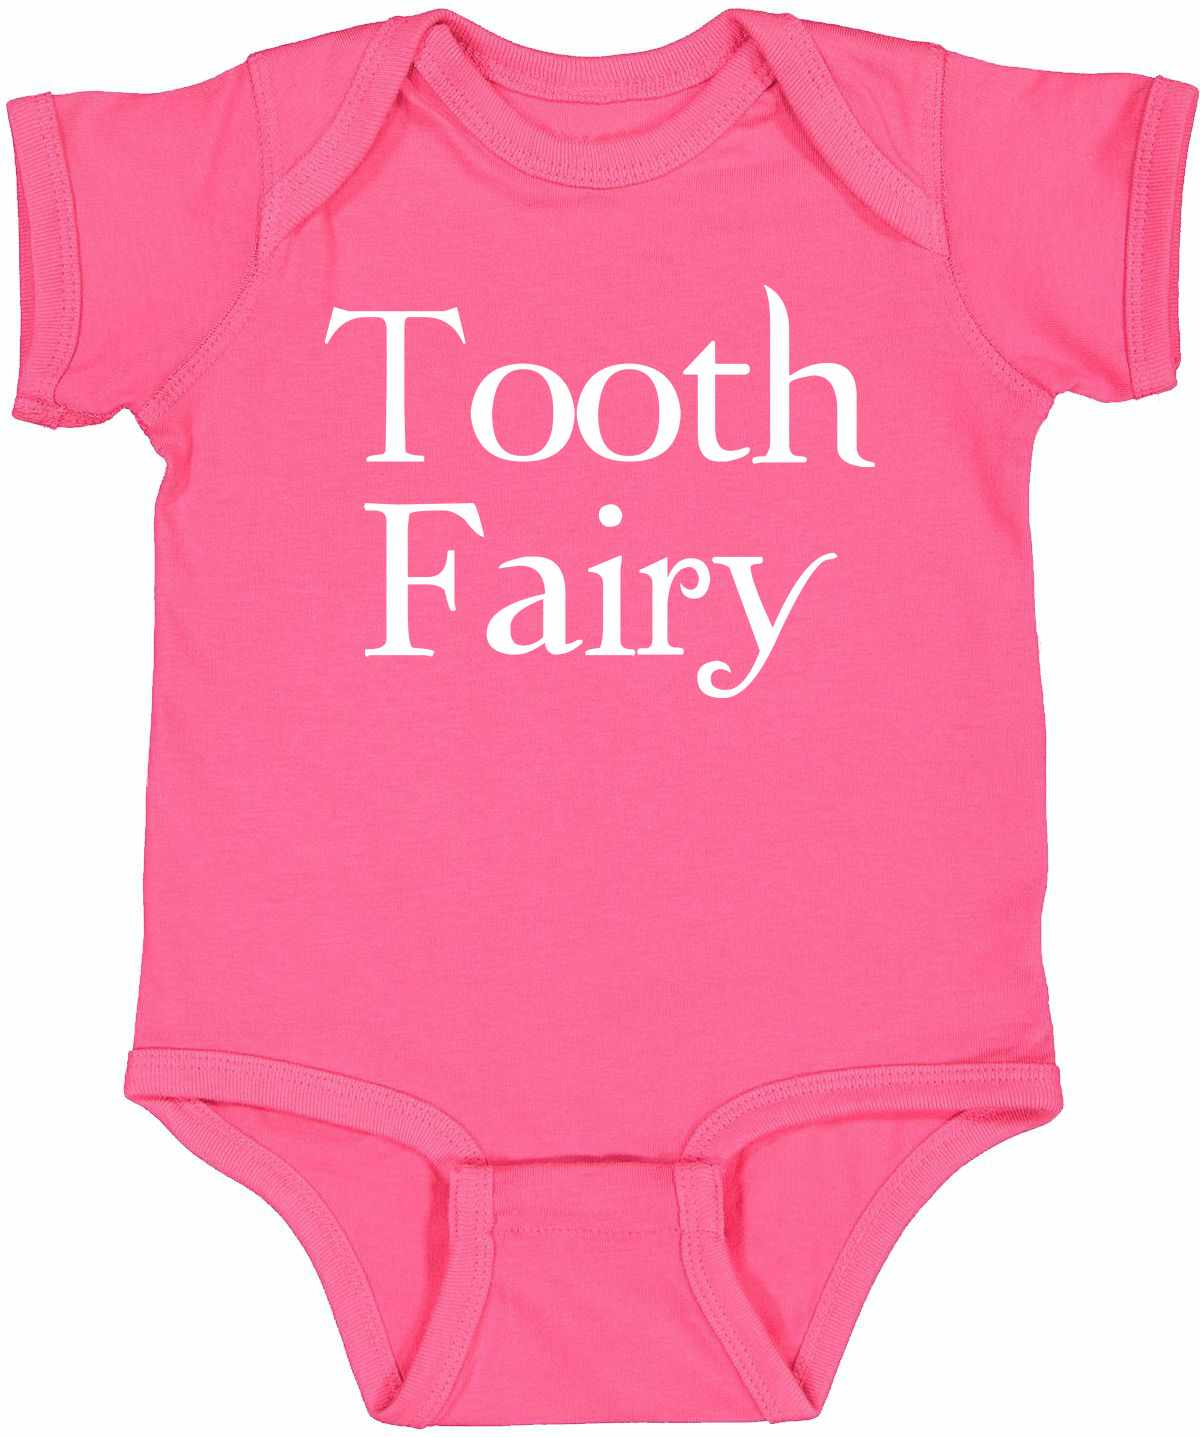 Tooth Fairy on Infant BodySuit (#680-10)